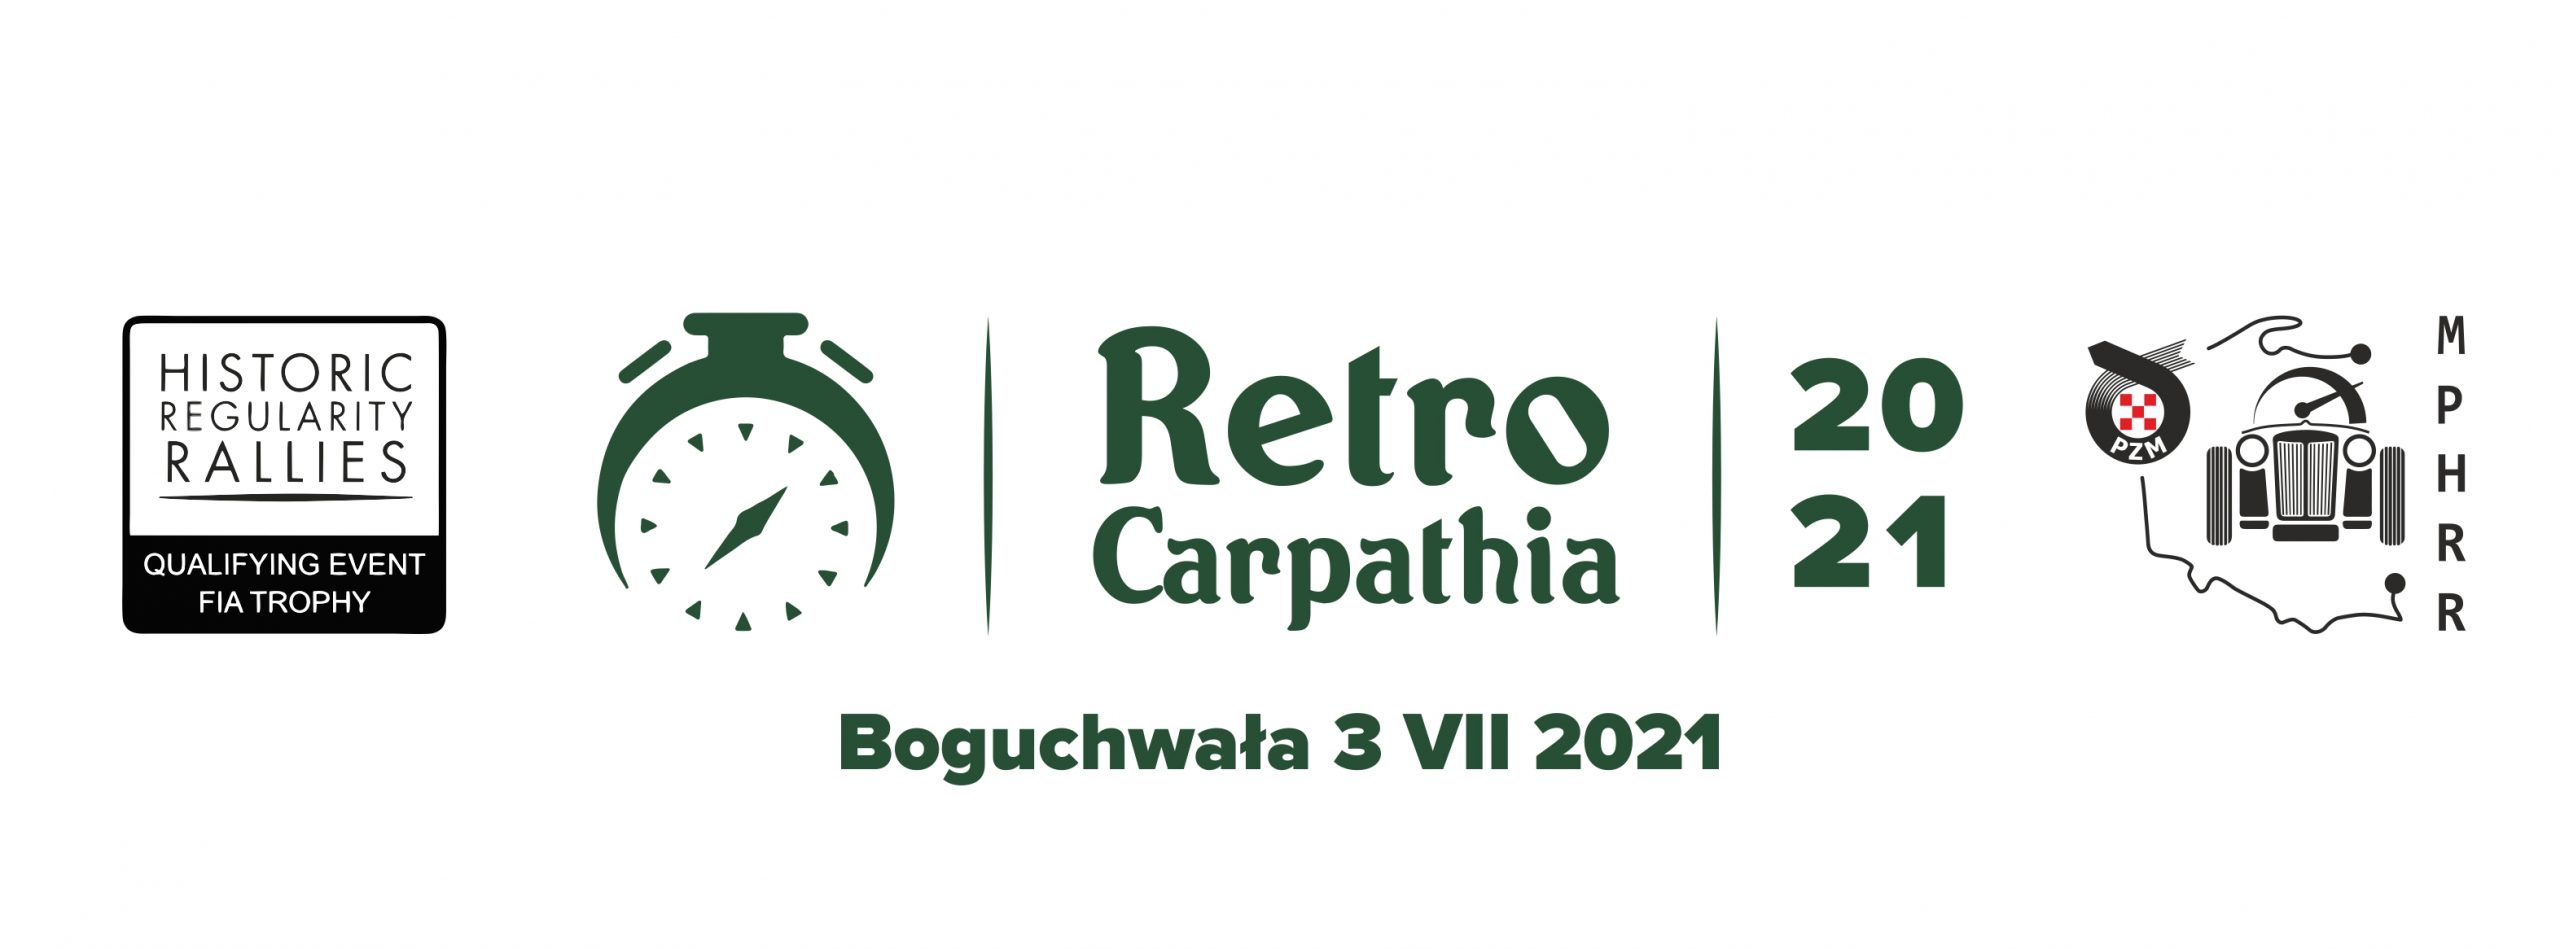 Rajd Retro Carpathia wystartuje już w ten weekend!